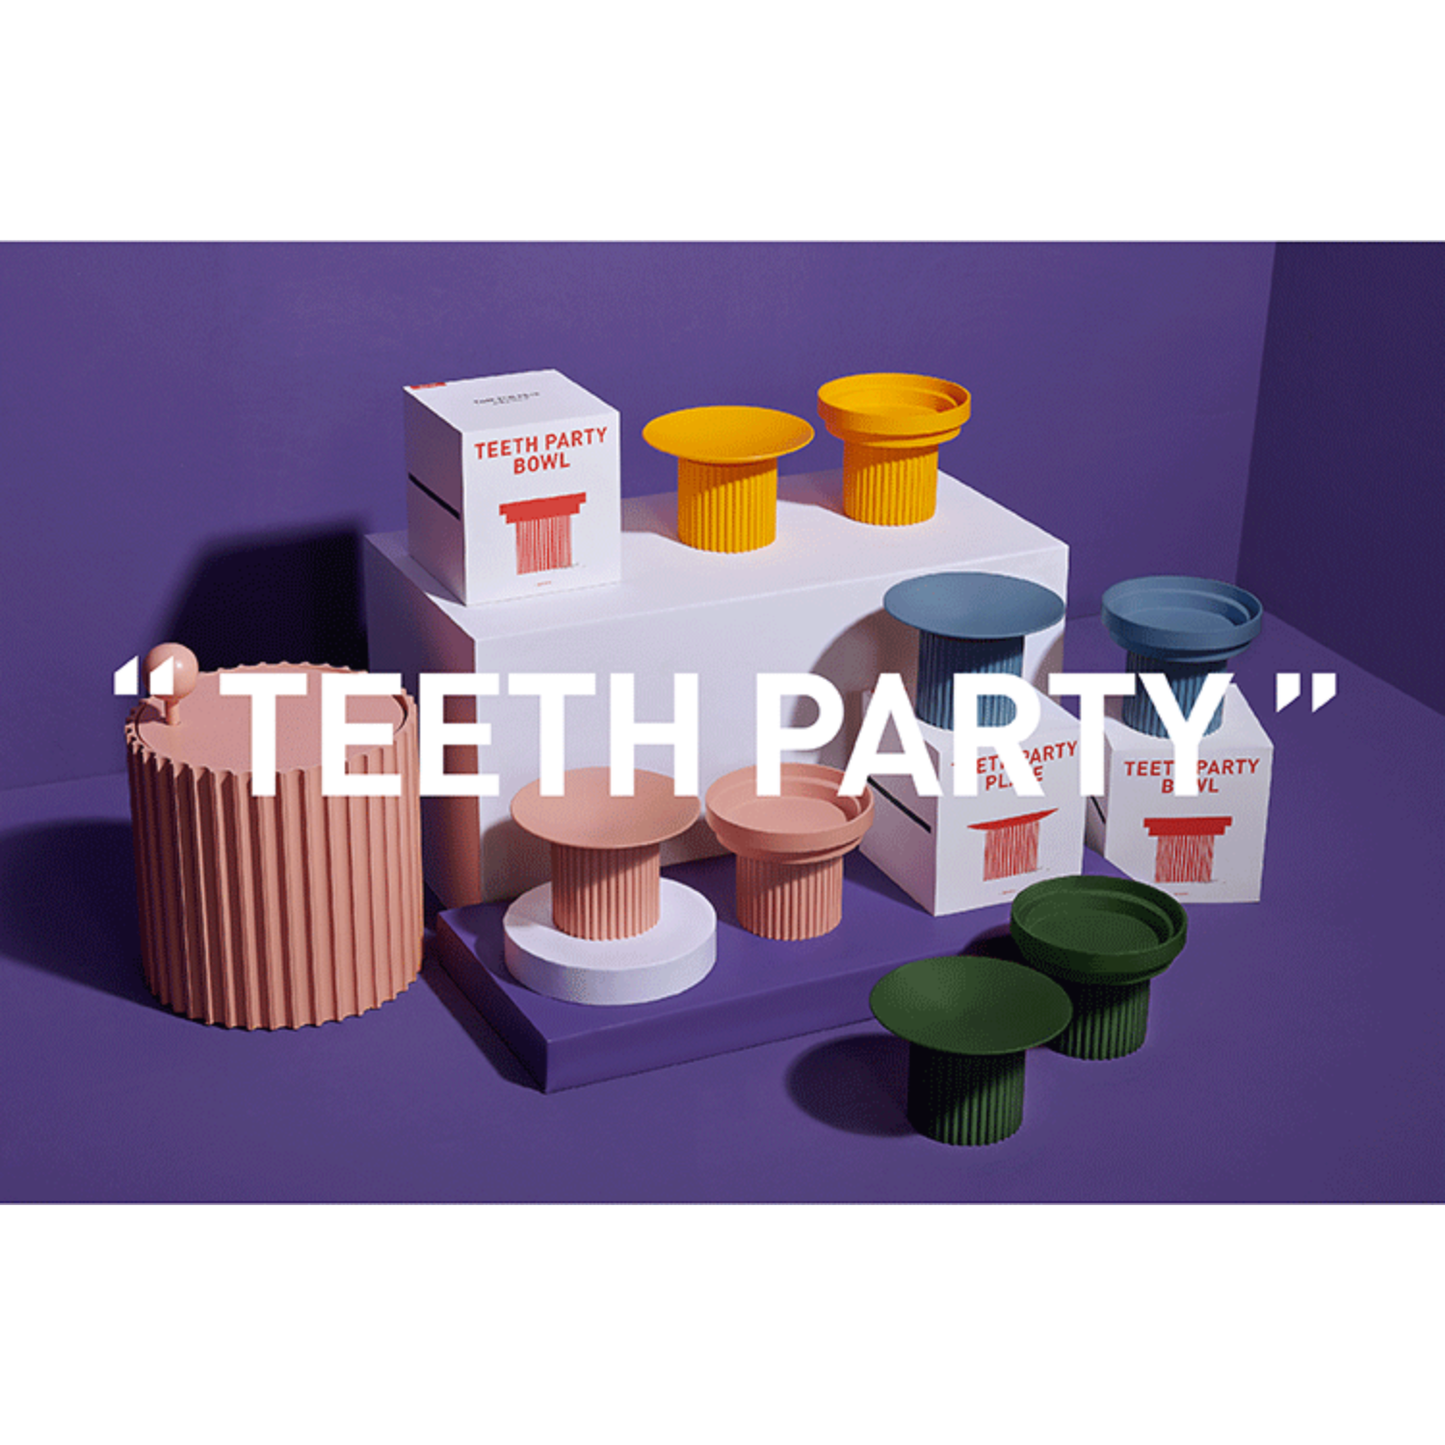 Teeth Party Bowl